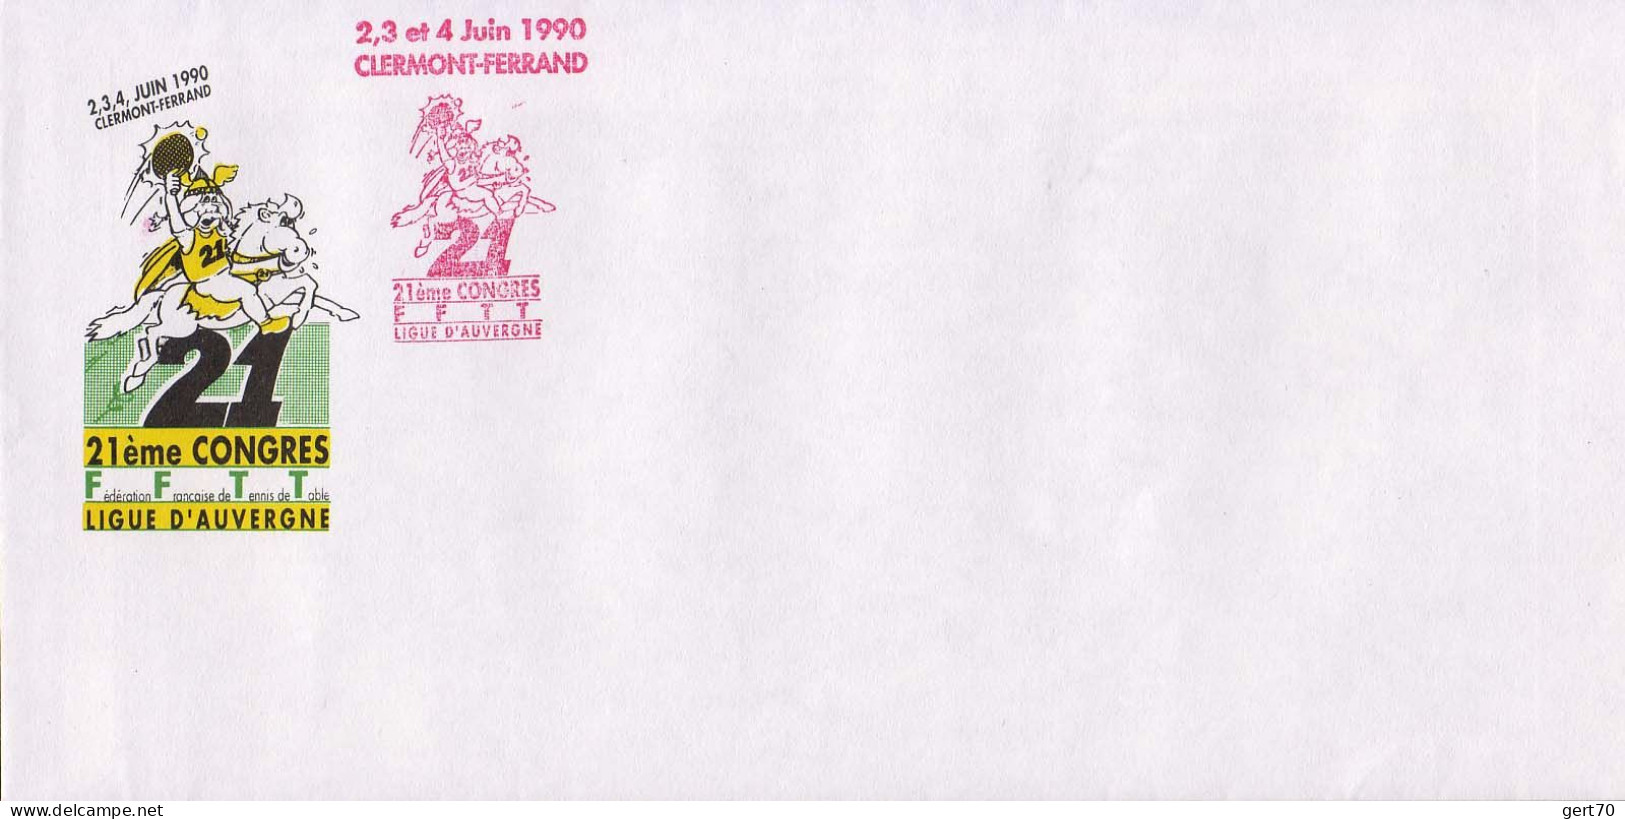 France 1990, Mint Cover / Enveloppe Vierge / 21st French TT Congress / Clermont-Ferrand - Tennis De Table